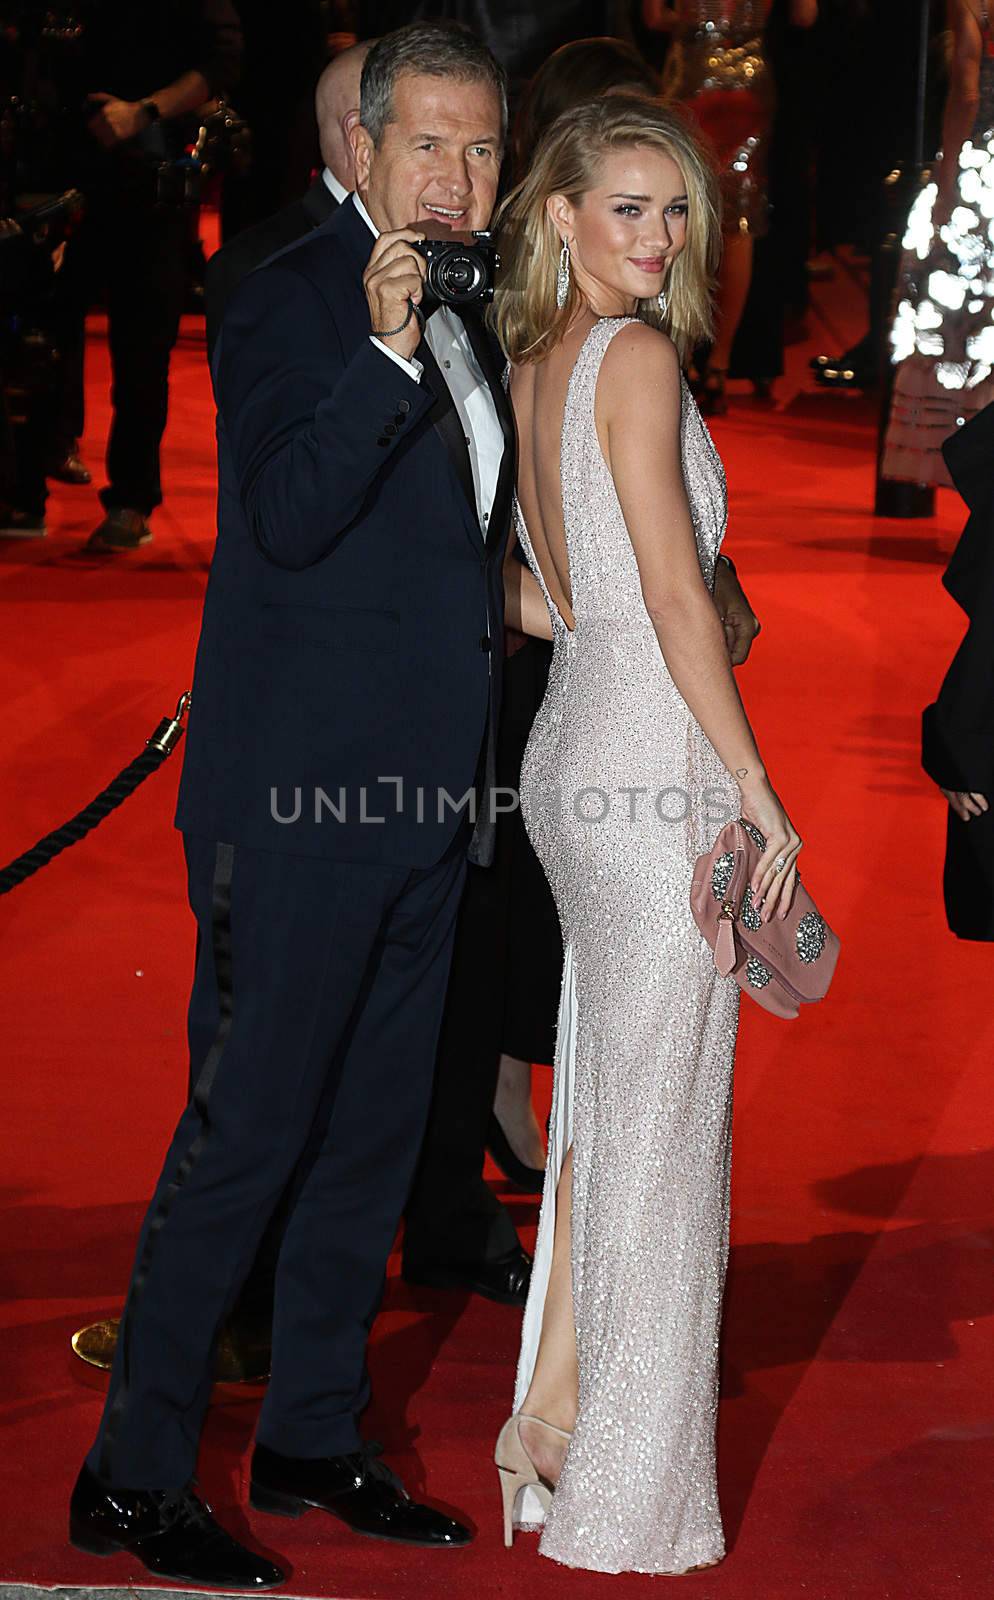 UK, London: Mario Testino and Rosie Huntington-Whiteley arrive at the British Fashion Awards at the London Coliseum in London, UK on November 23, 2015.